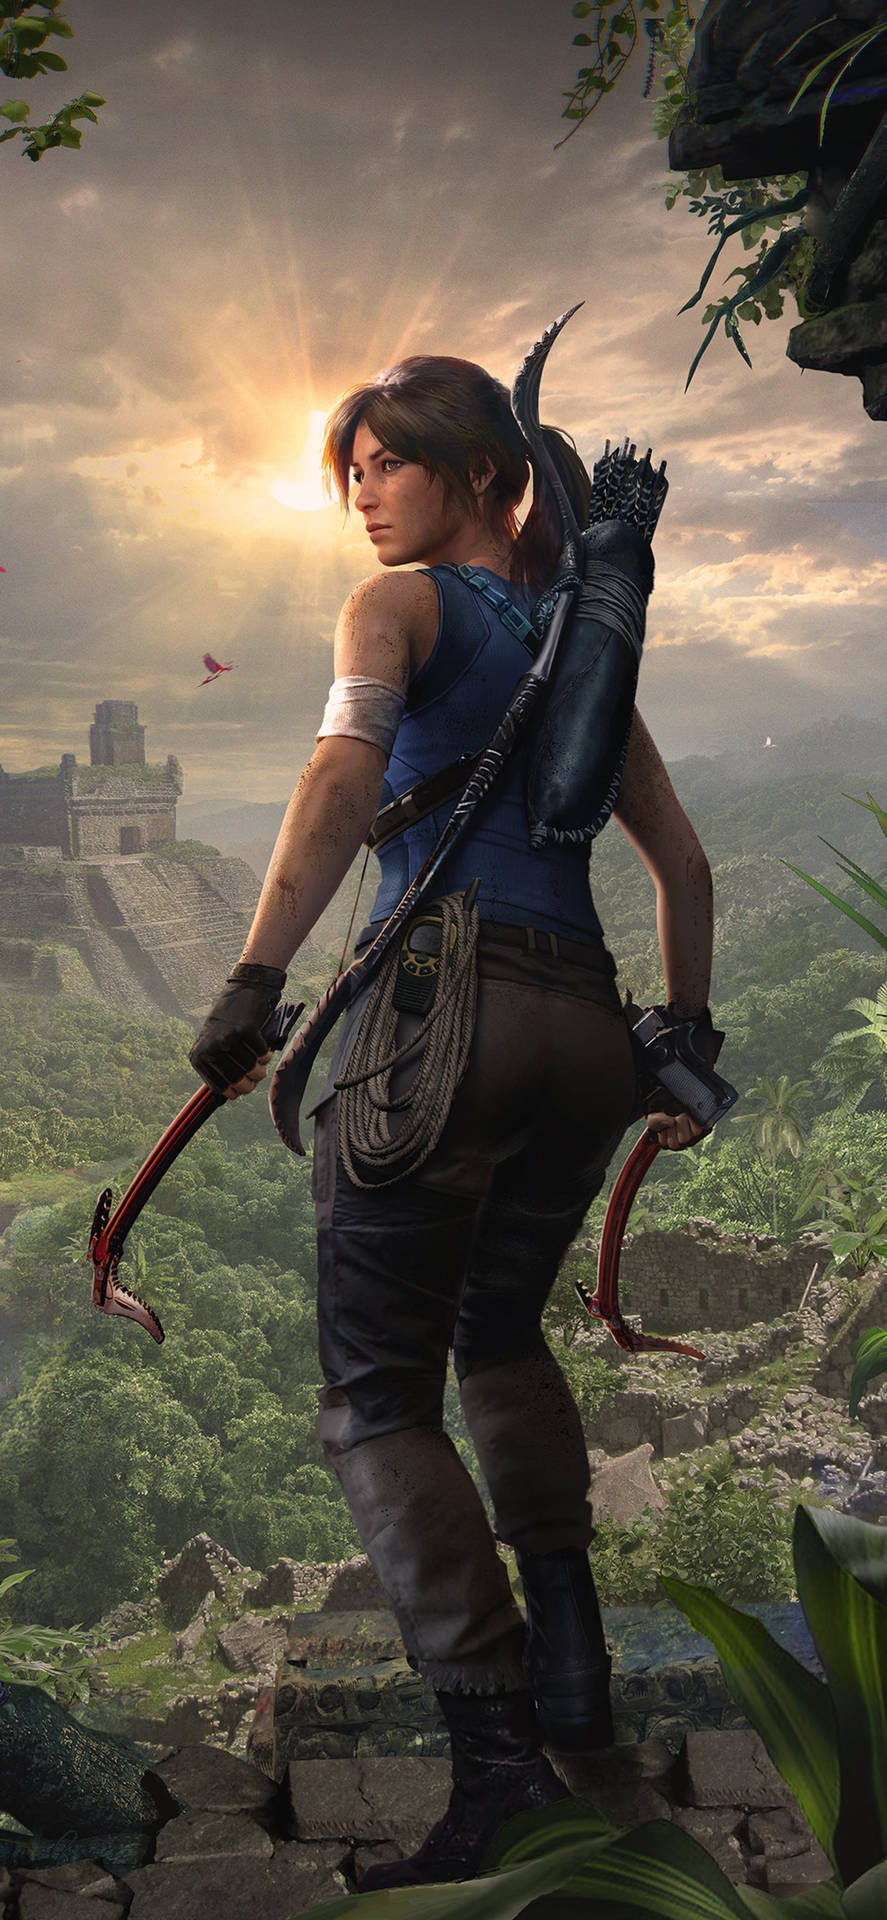 "Unlock the Bonds of Adventure With the Lara Croft iPhone" Wallpaper